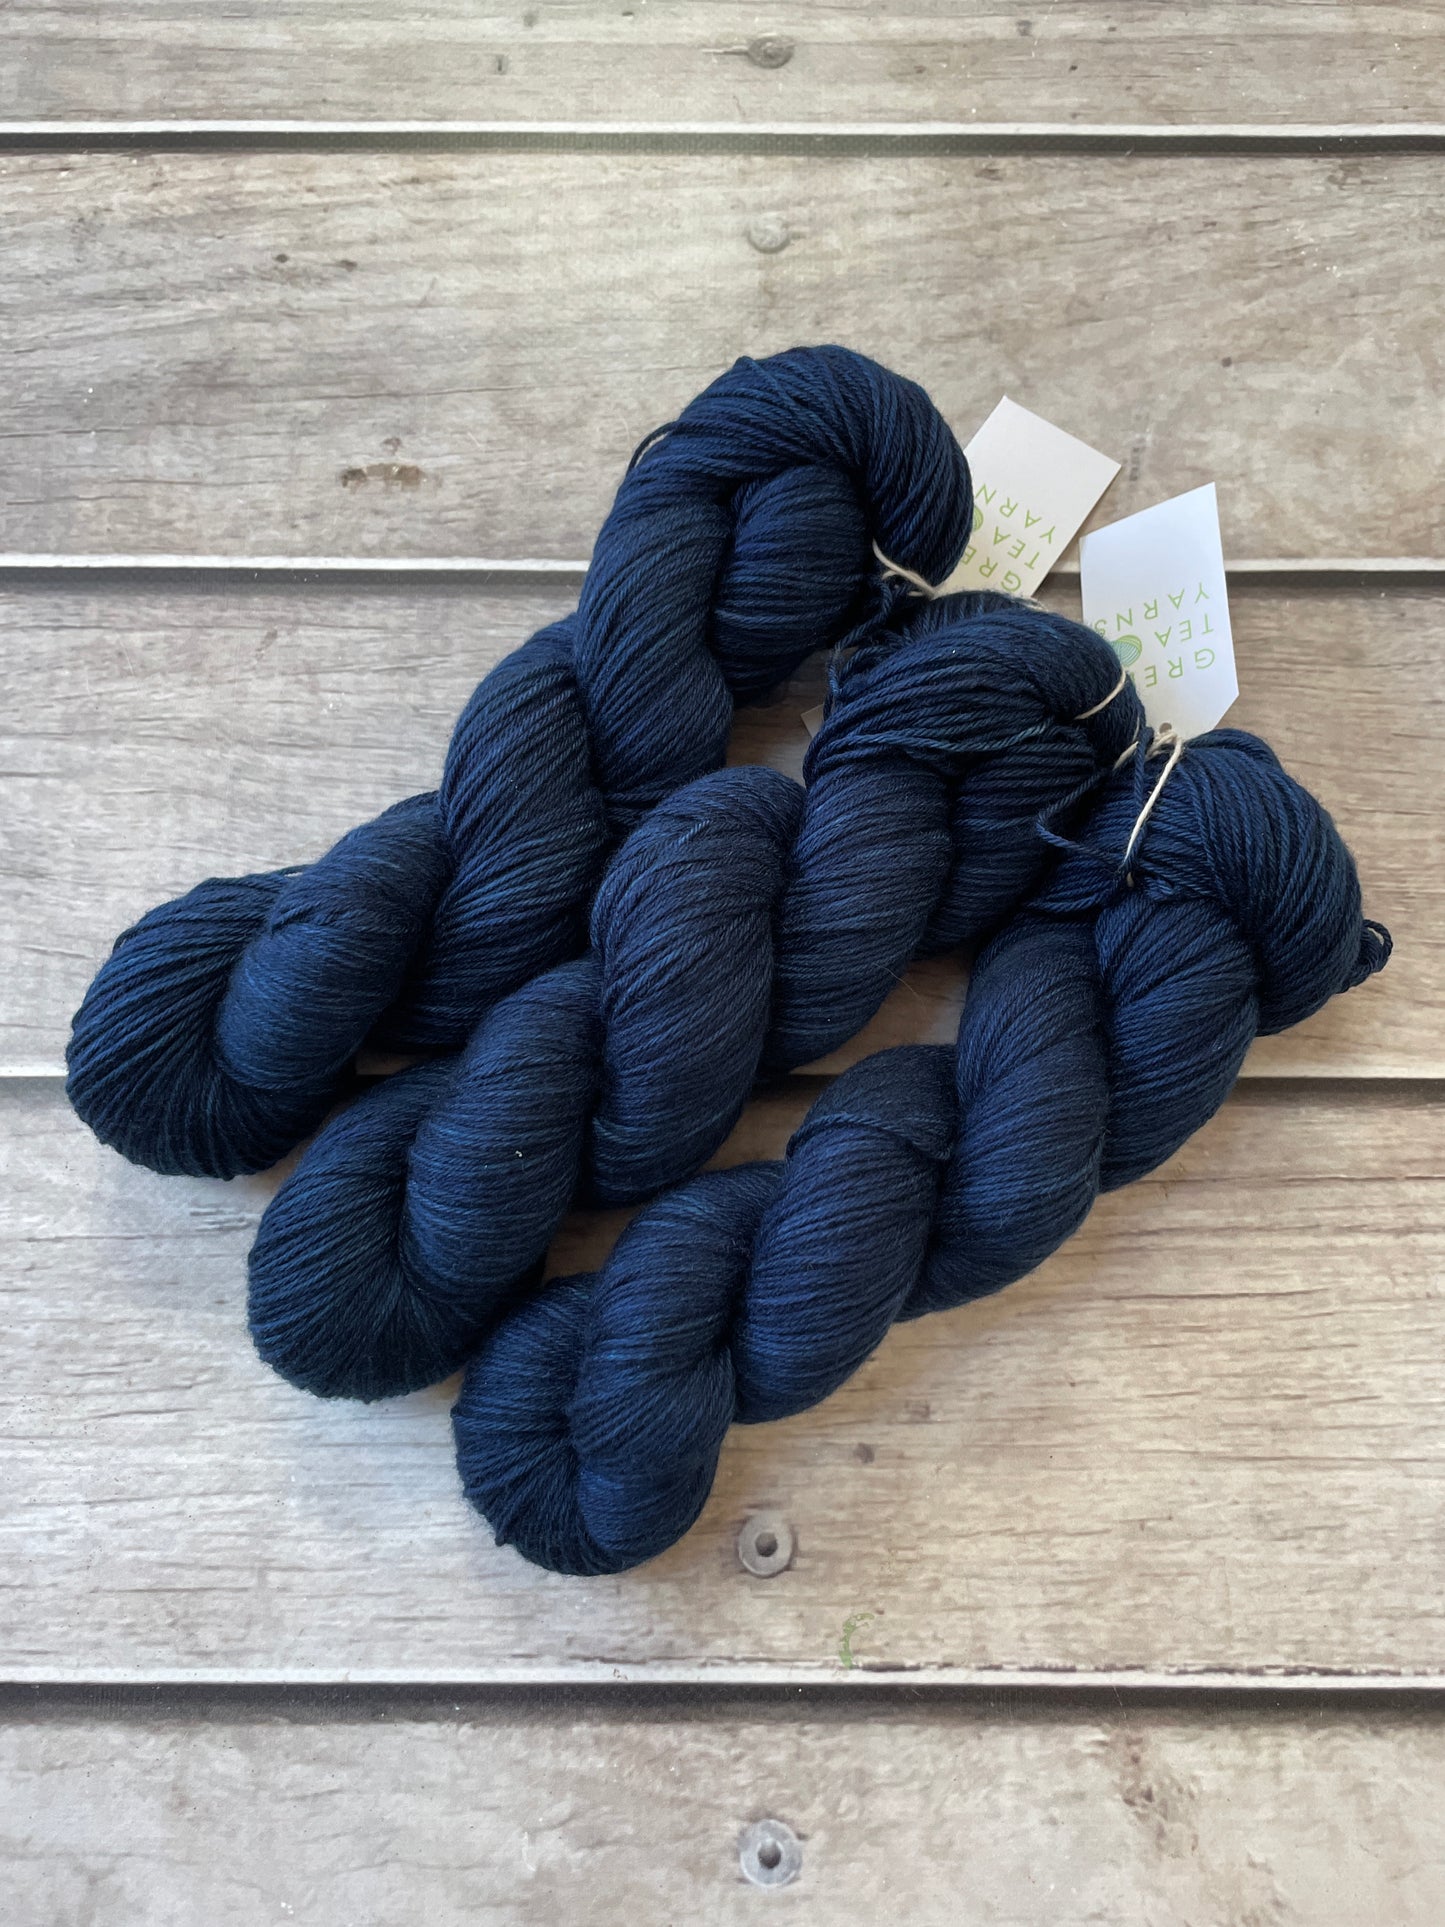 True Blue - sock yarn in merino and nylon - Darjeeling